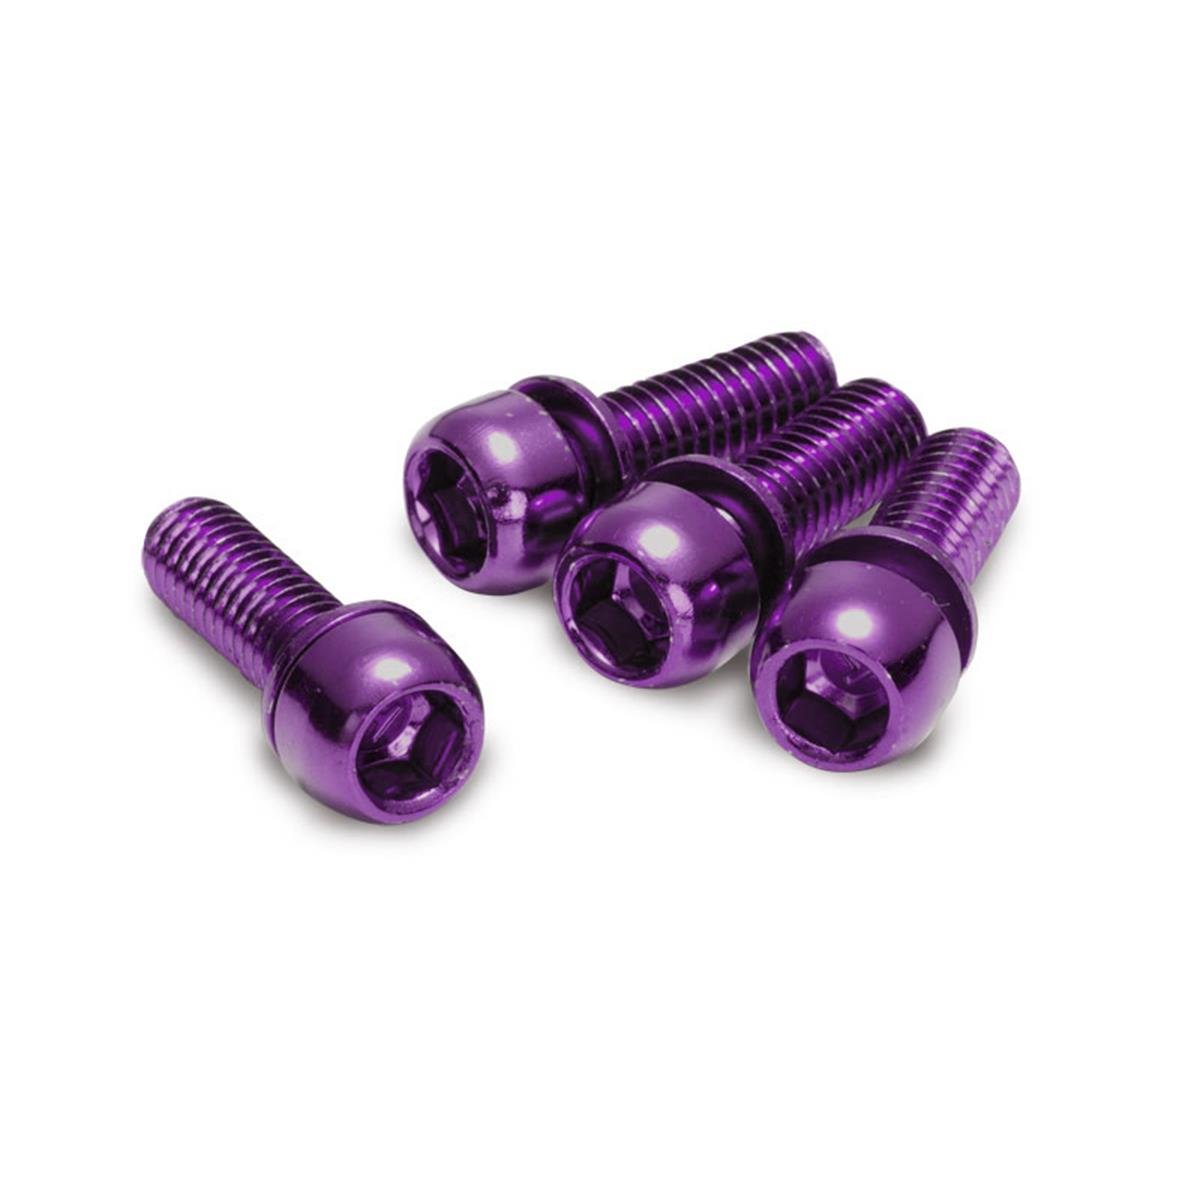 Reverse Components Brake Adapter Screws  M6x18mm, 4 Pack, Purple